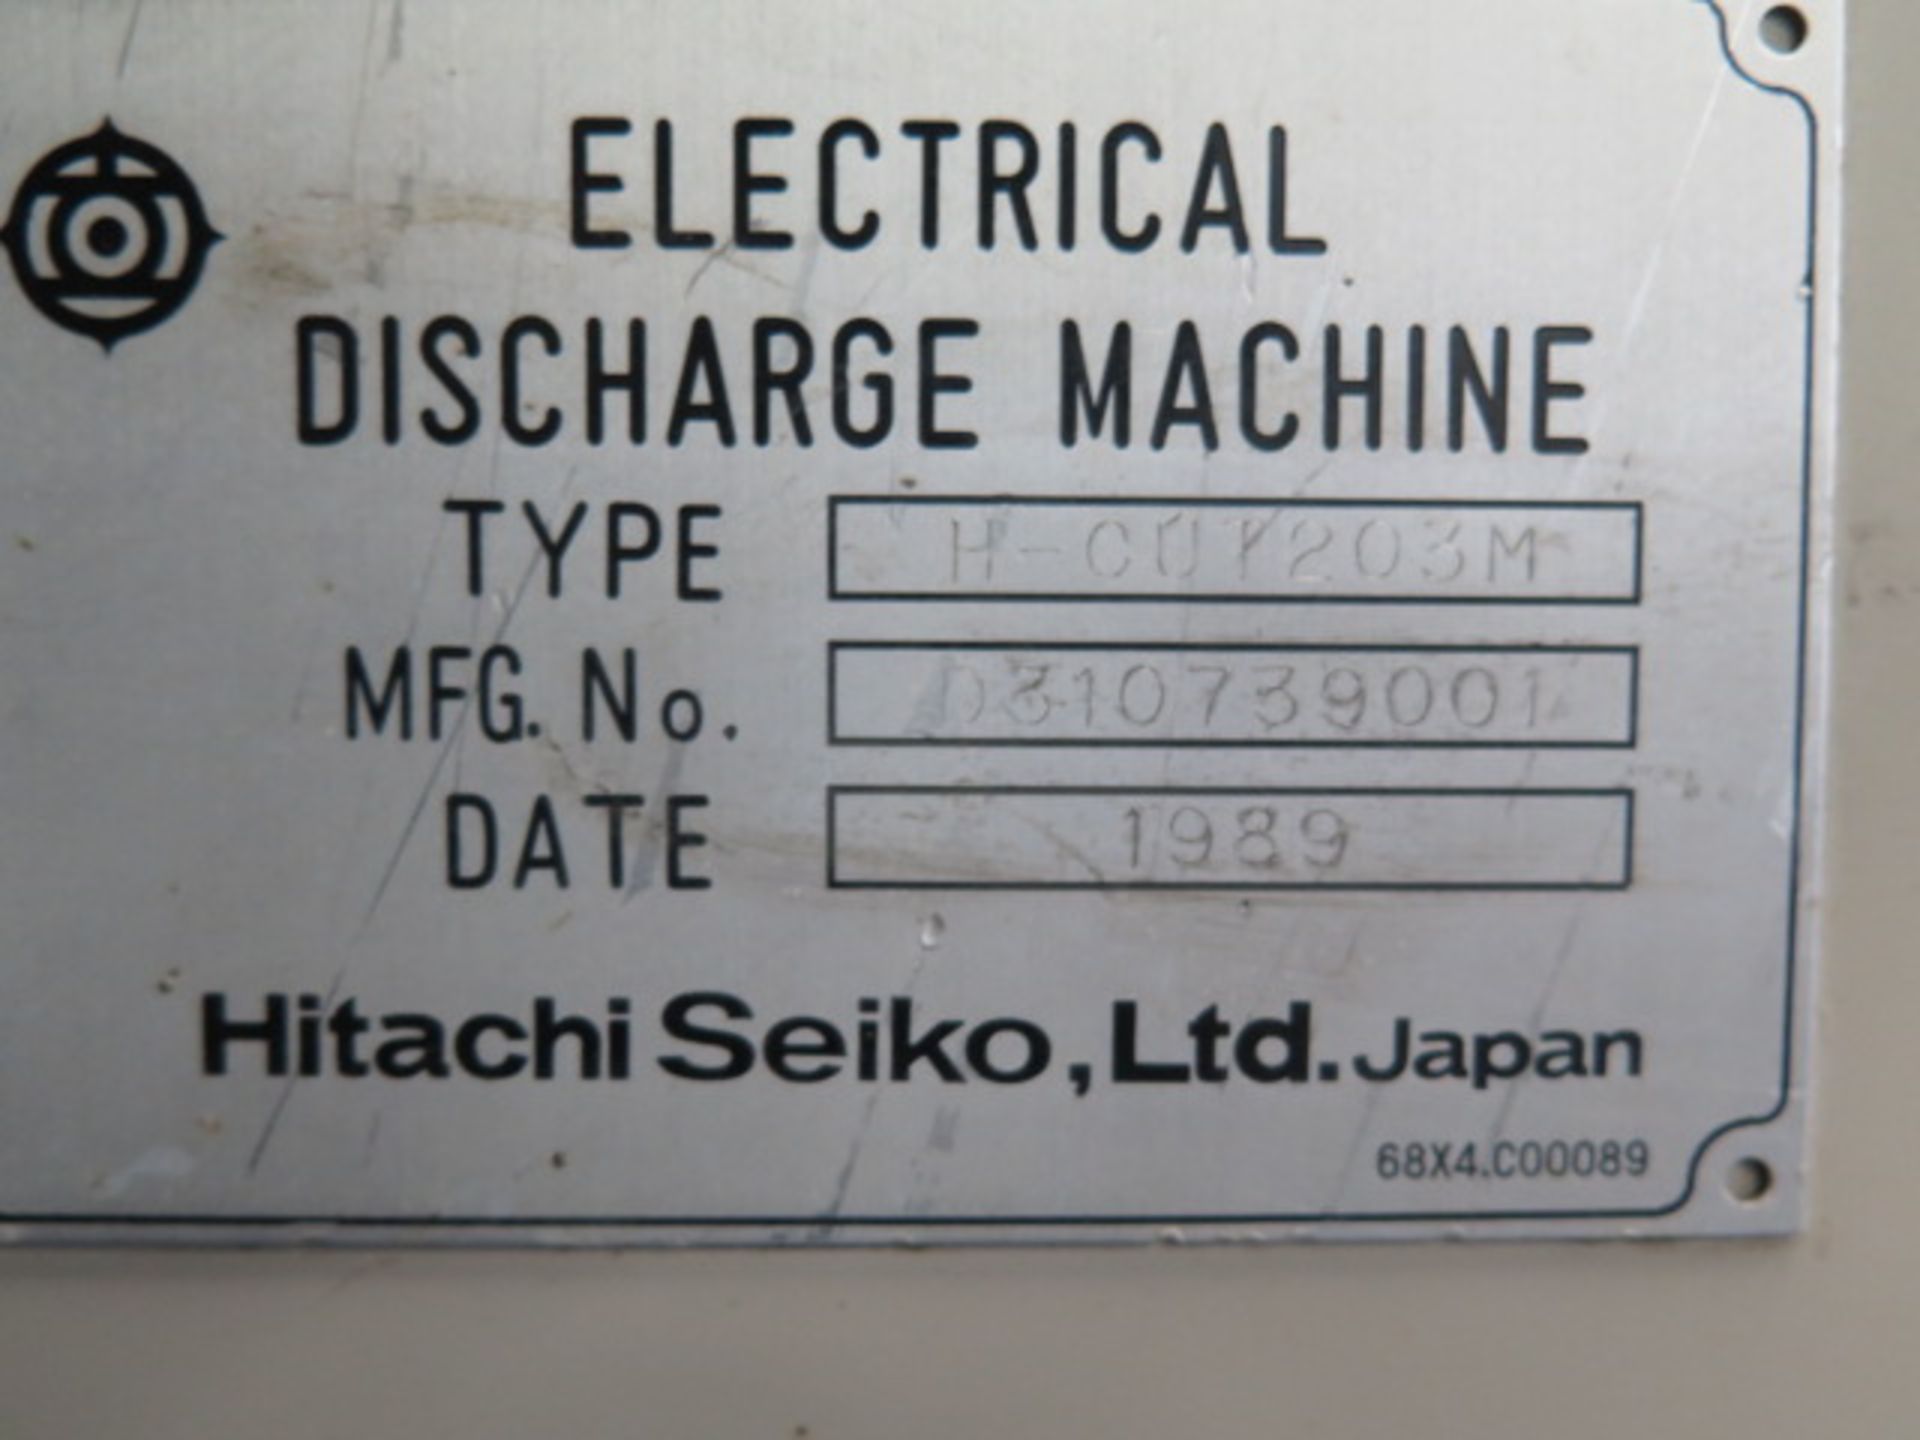 Hitachi H-CUT203M CNC Wire EDM Machine s/n D310739001 w/ Fanuc System HF Controls, 10” x 14” Work - Image 7 of 7